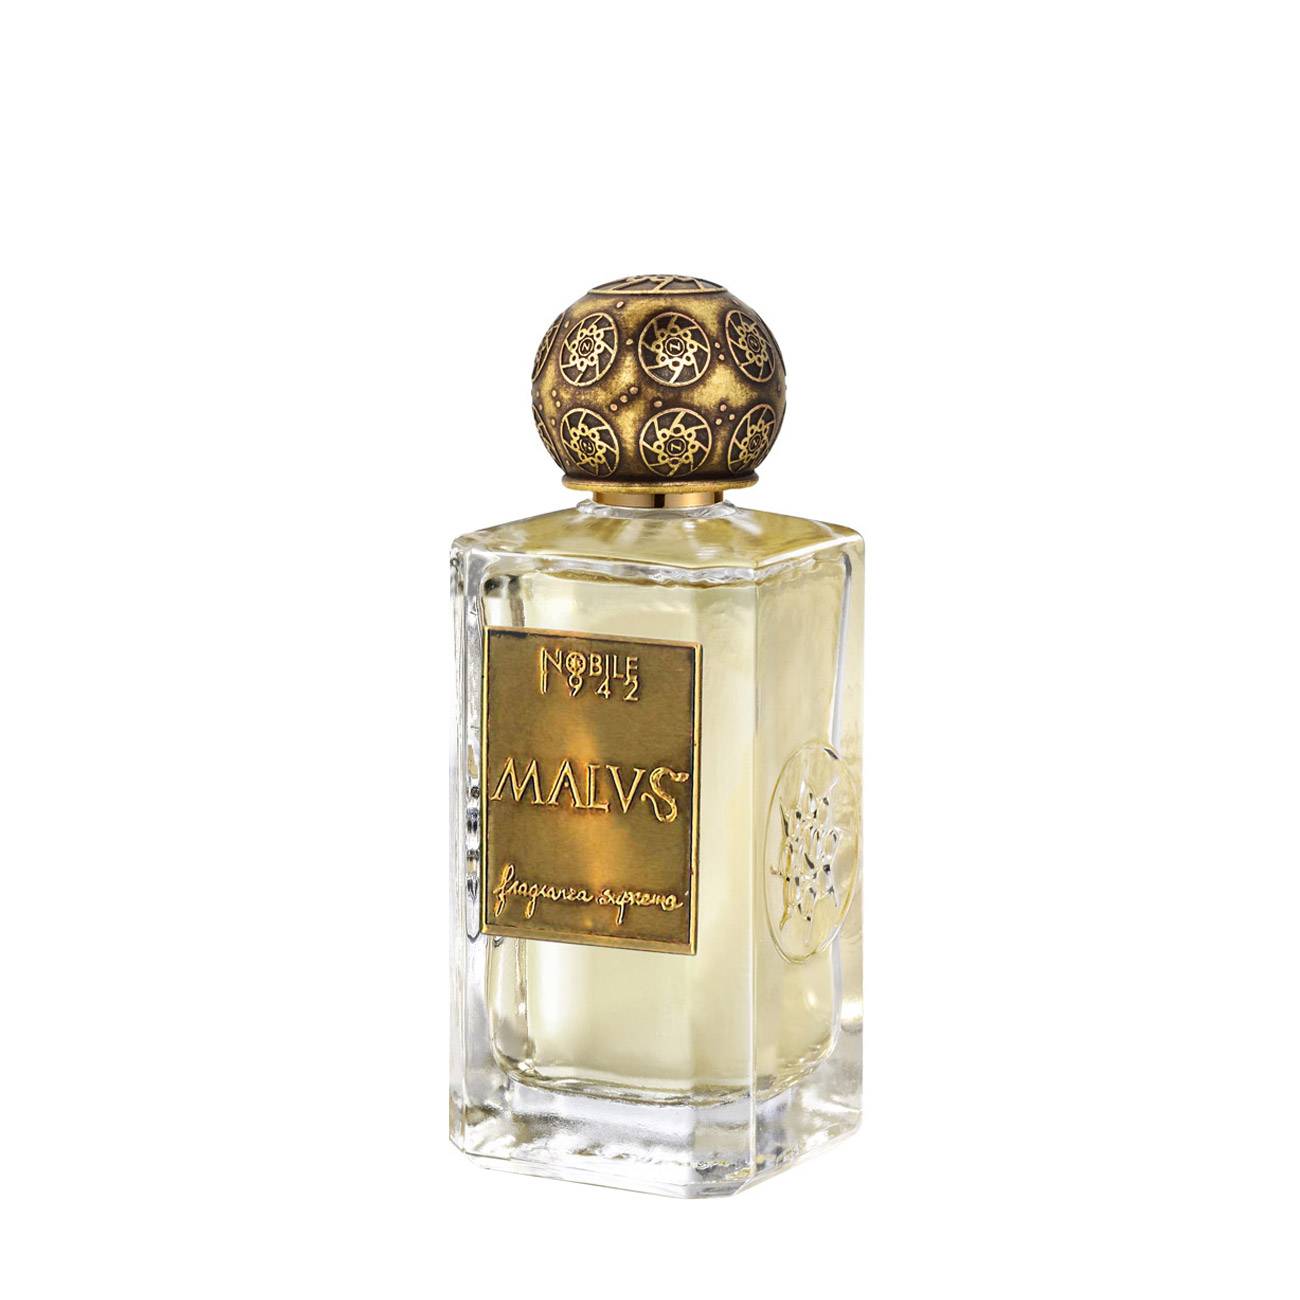 Parfum de niche Nobile 1942 MALVS 75ml cu comanda online